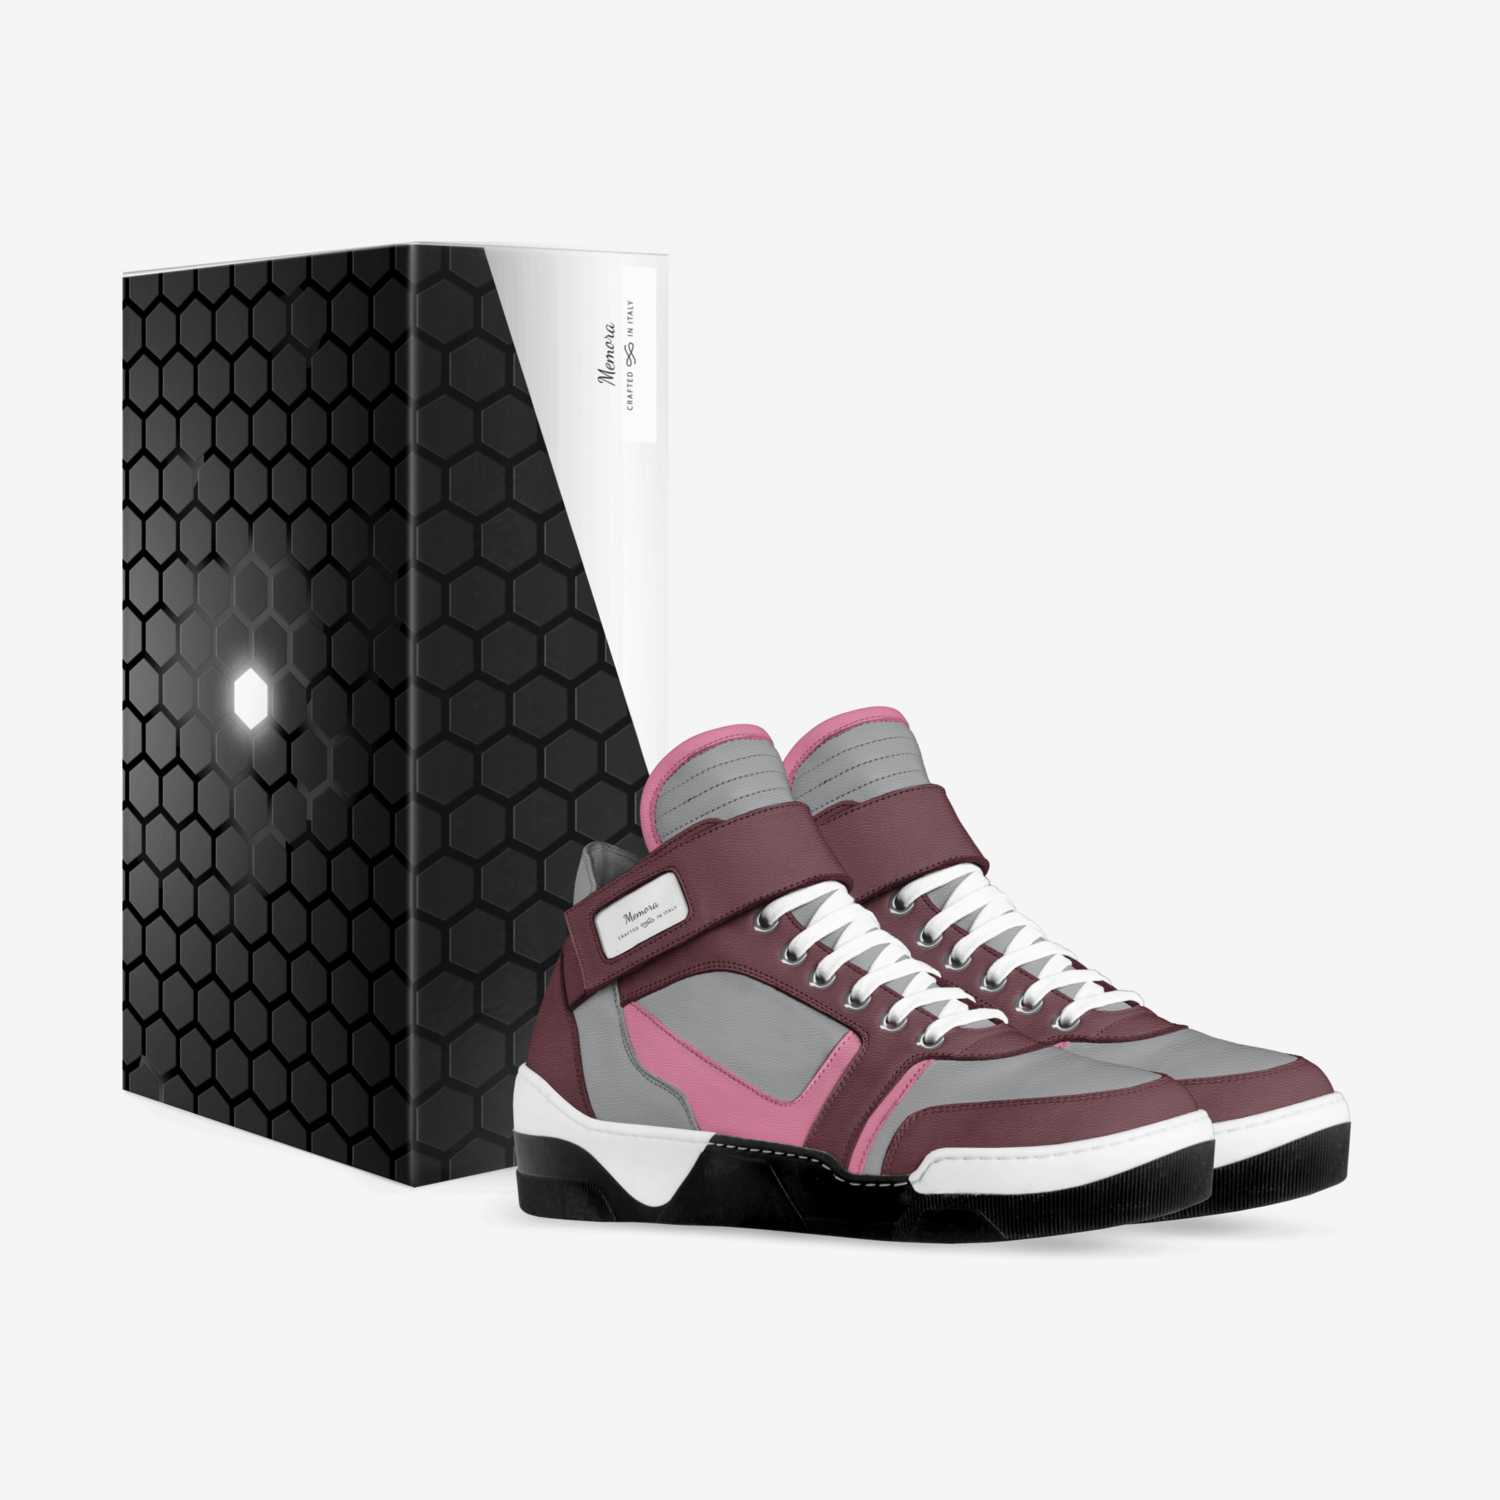 Memora custom made in Italy shoes by Mira Memora | Box view